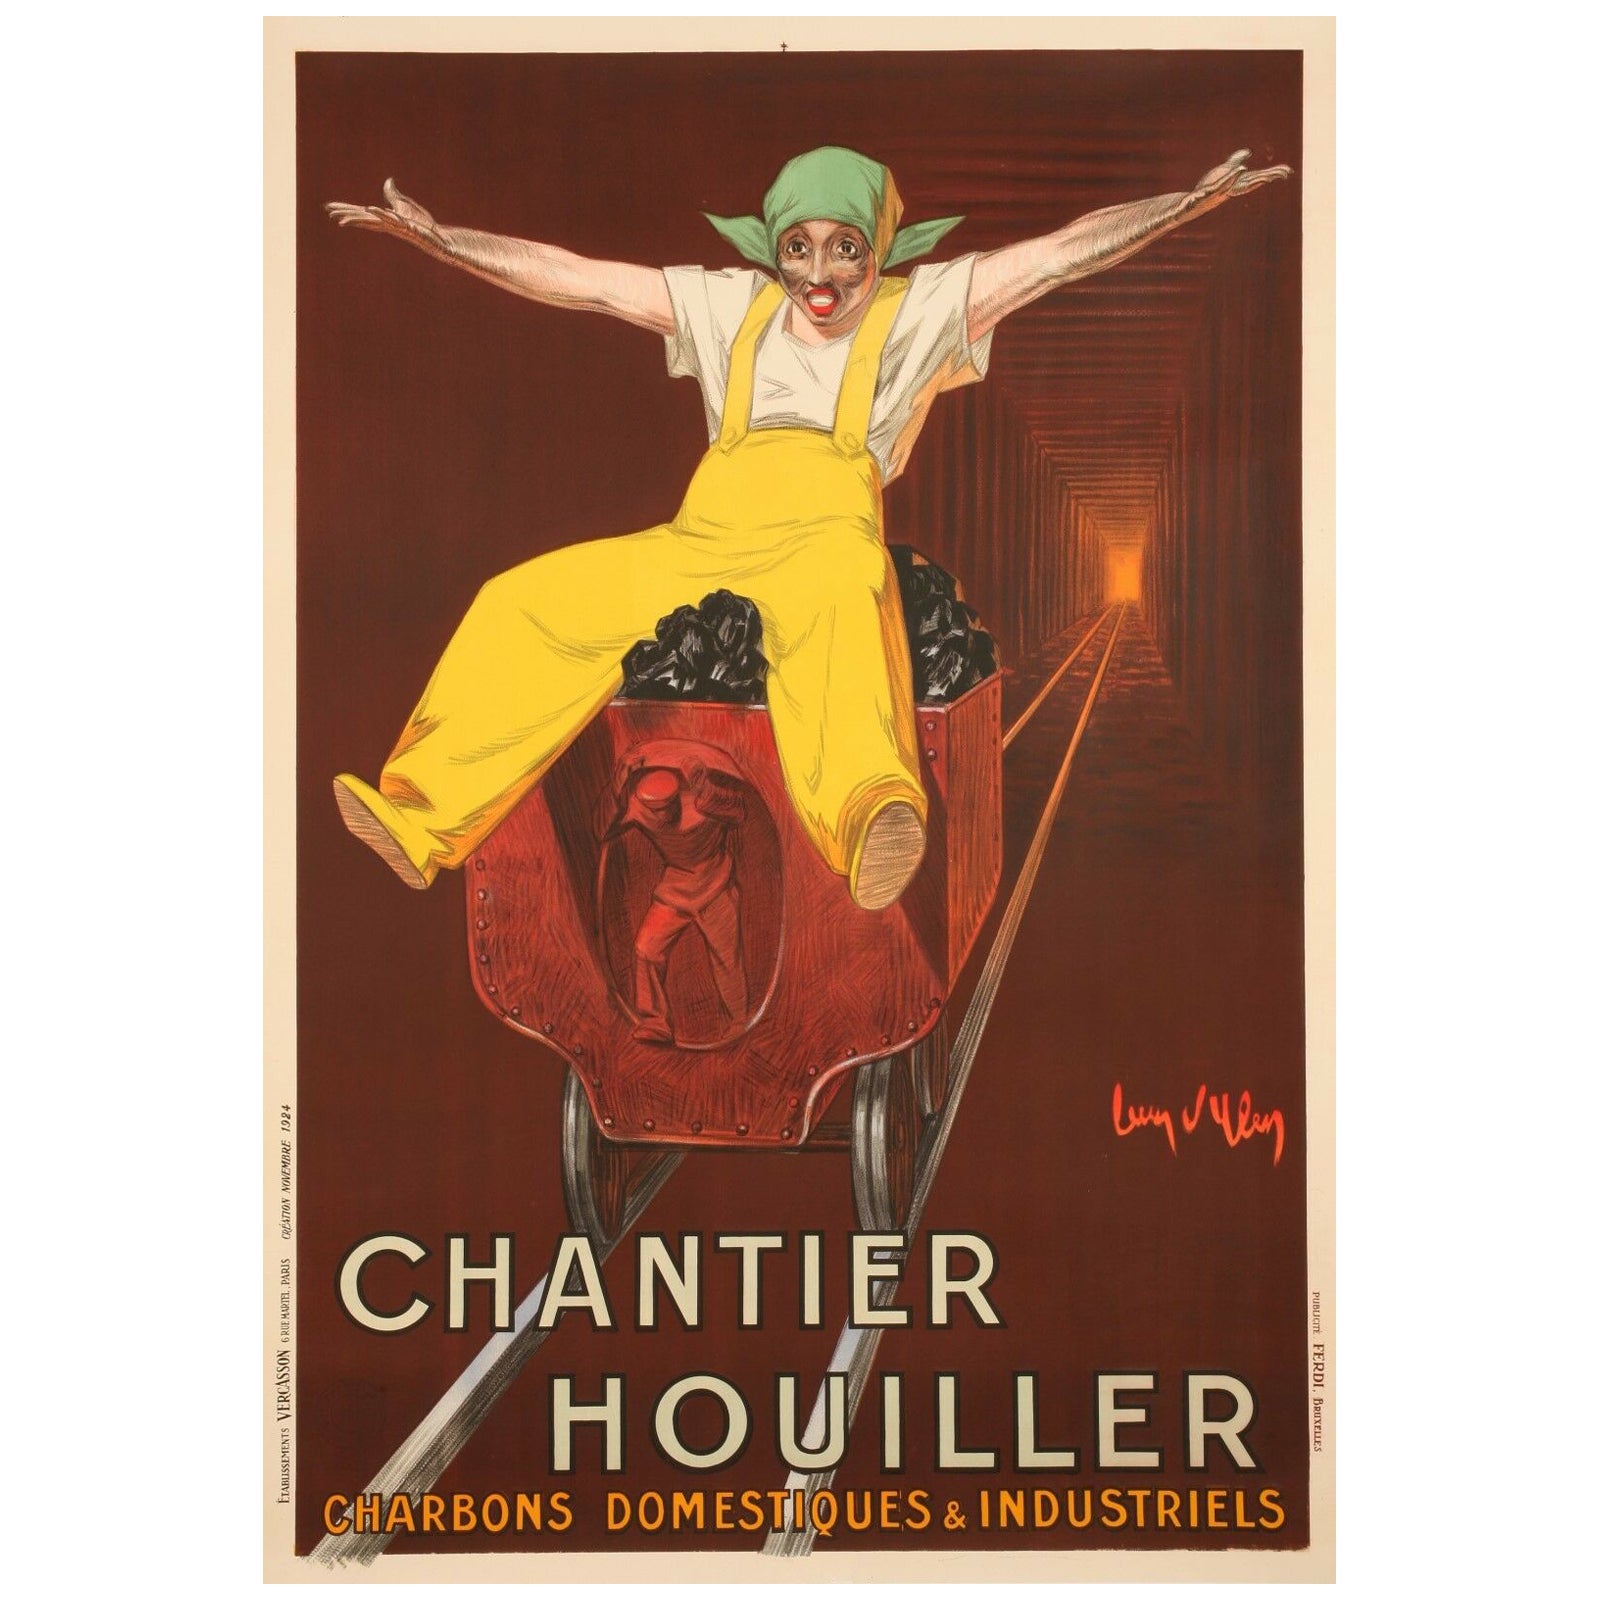 Original Vintage Poster-Jean D'Ylen-Charbon-Commodity-Mining-Rail, 1924 For Sale